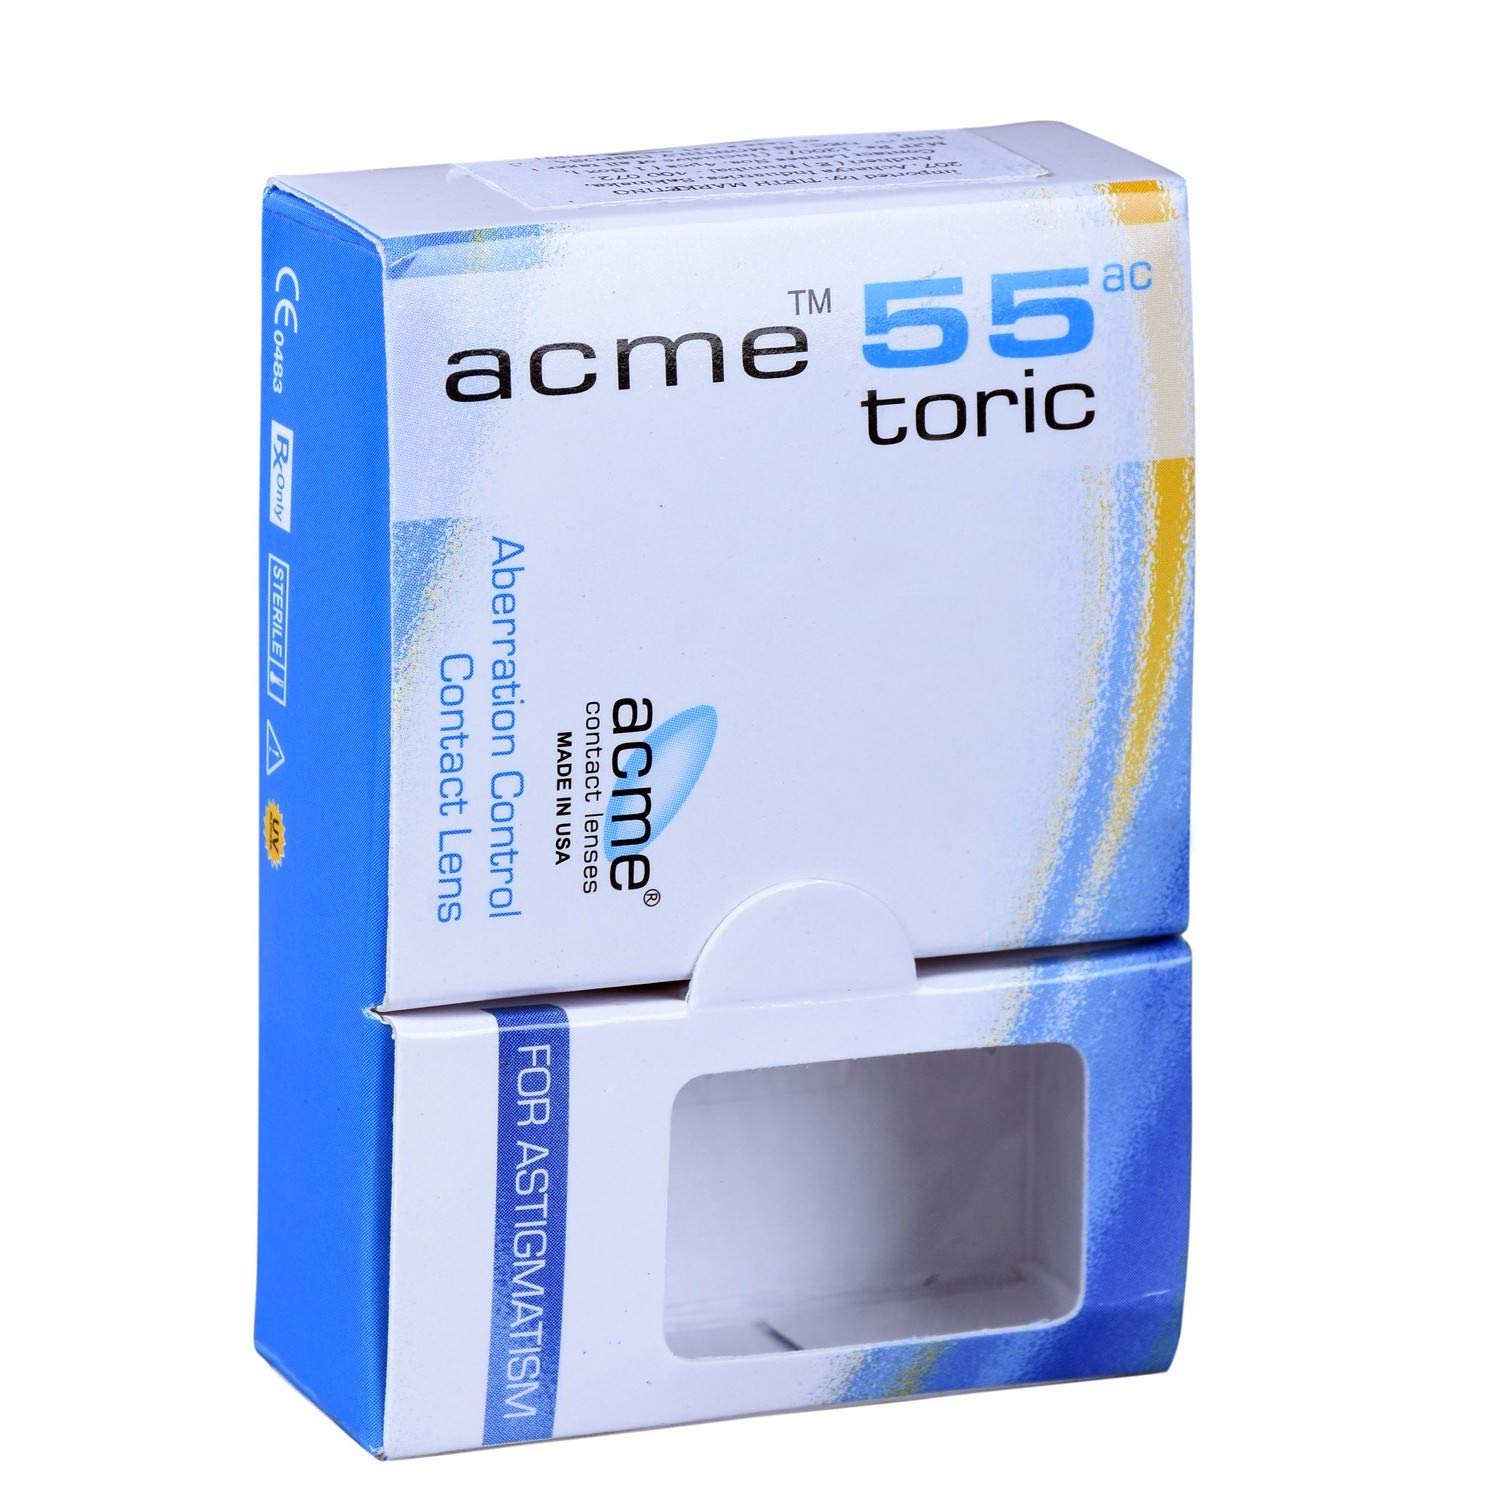 Acme 55 Toric Lens